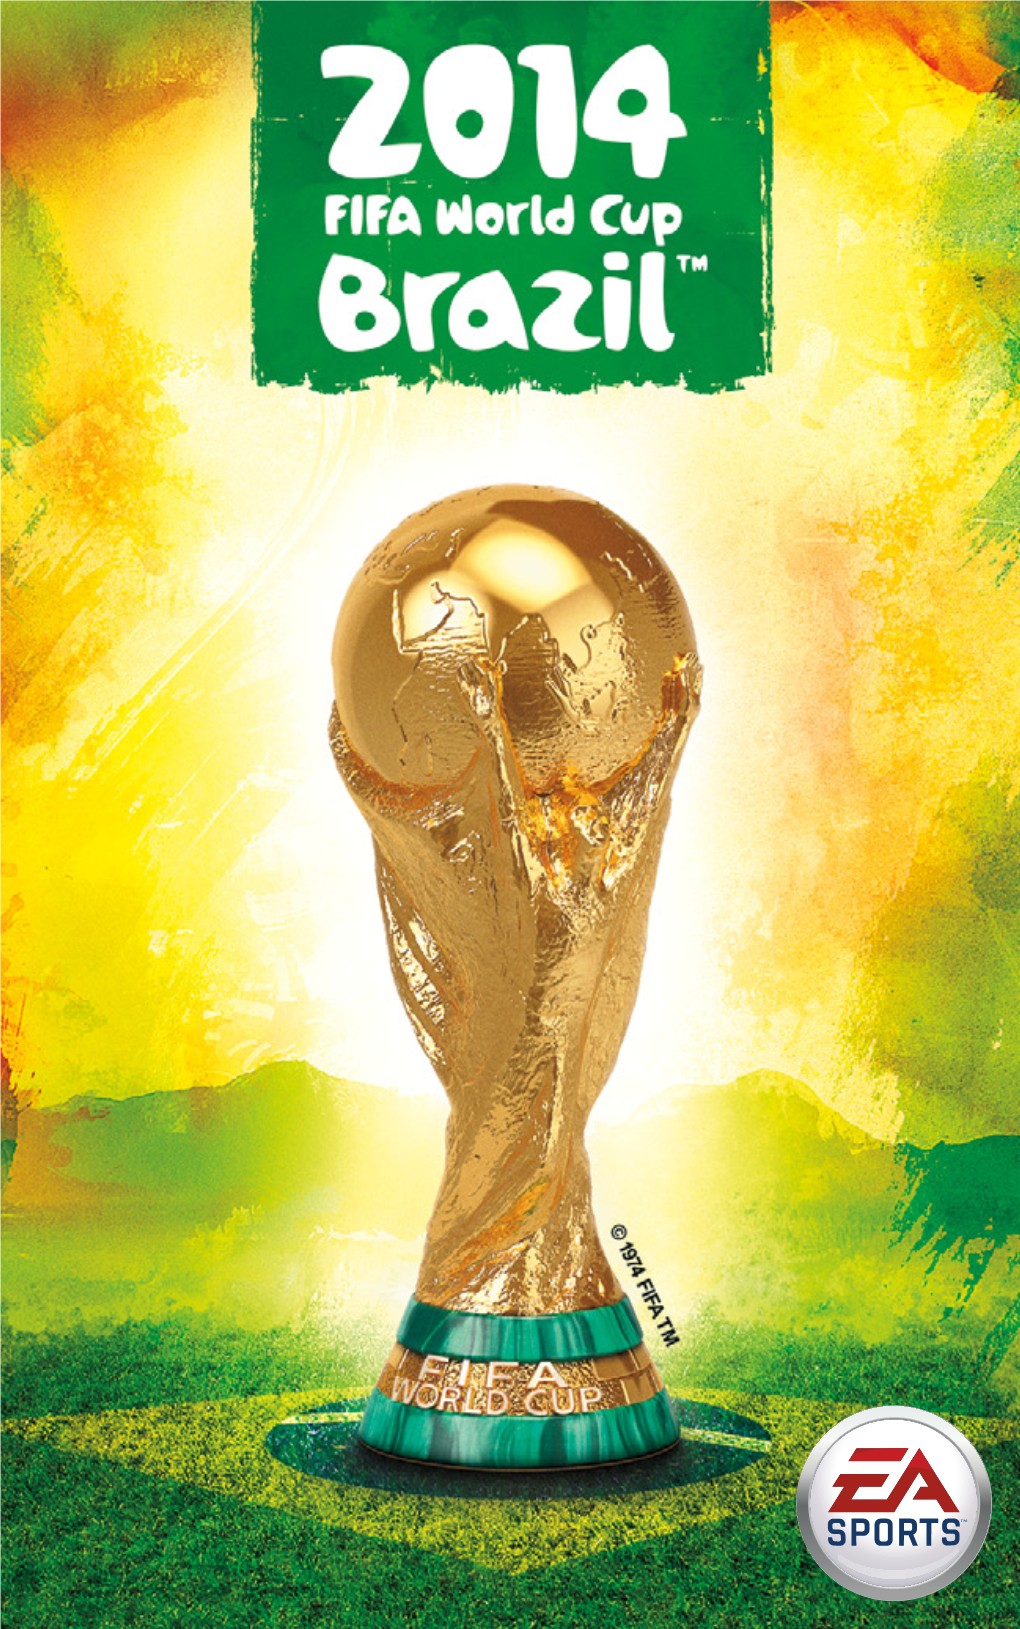 Fifa-World-Cup-2014-Manuals Sony Playstation 3 Us.Pdf